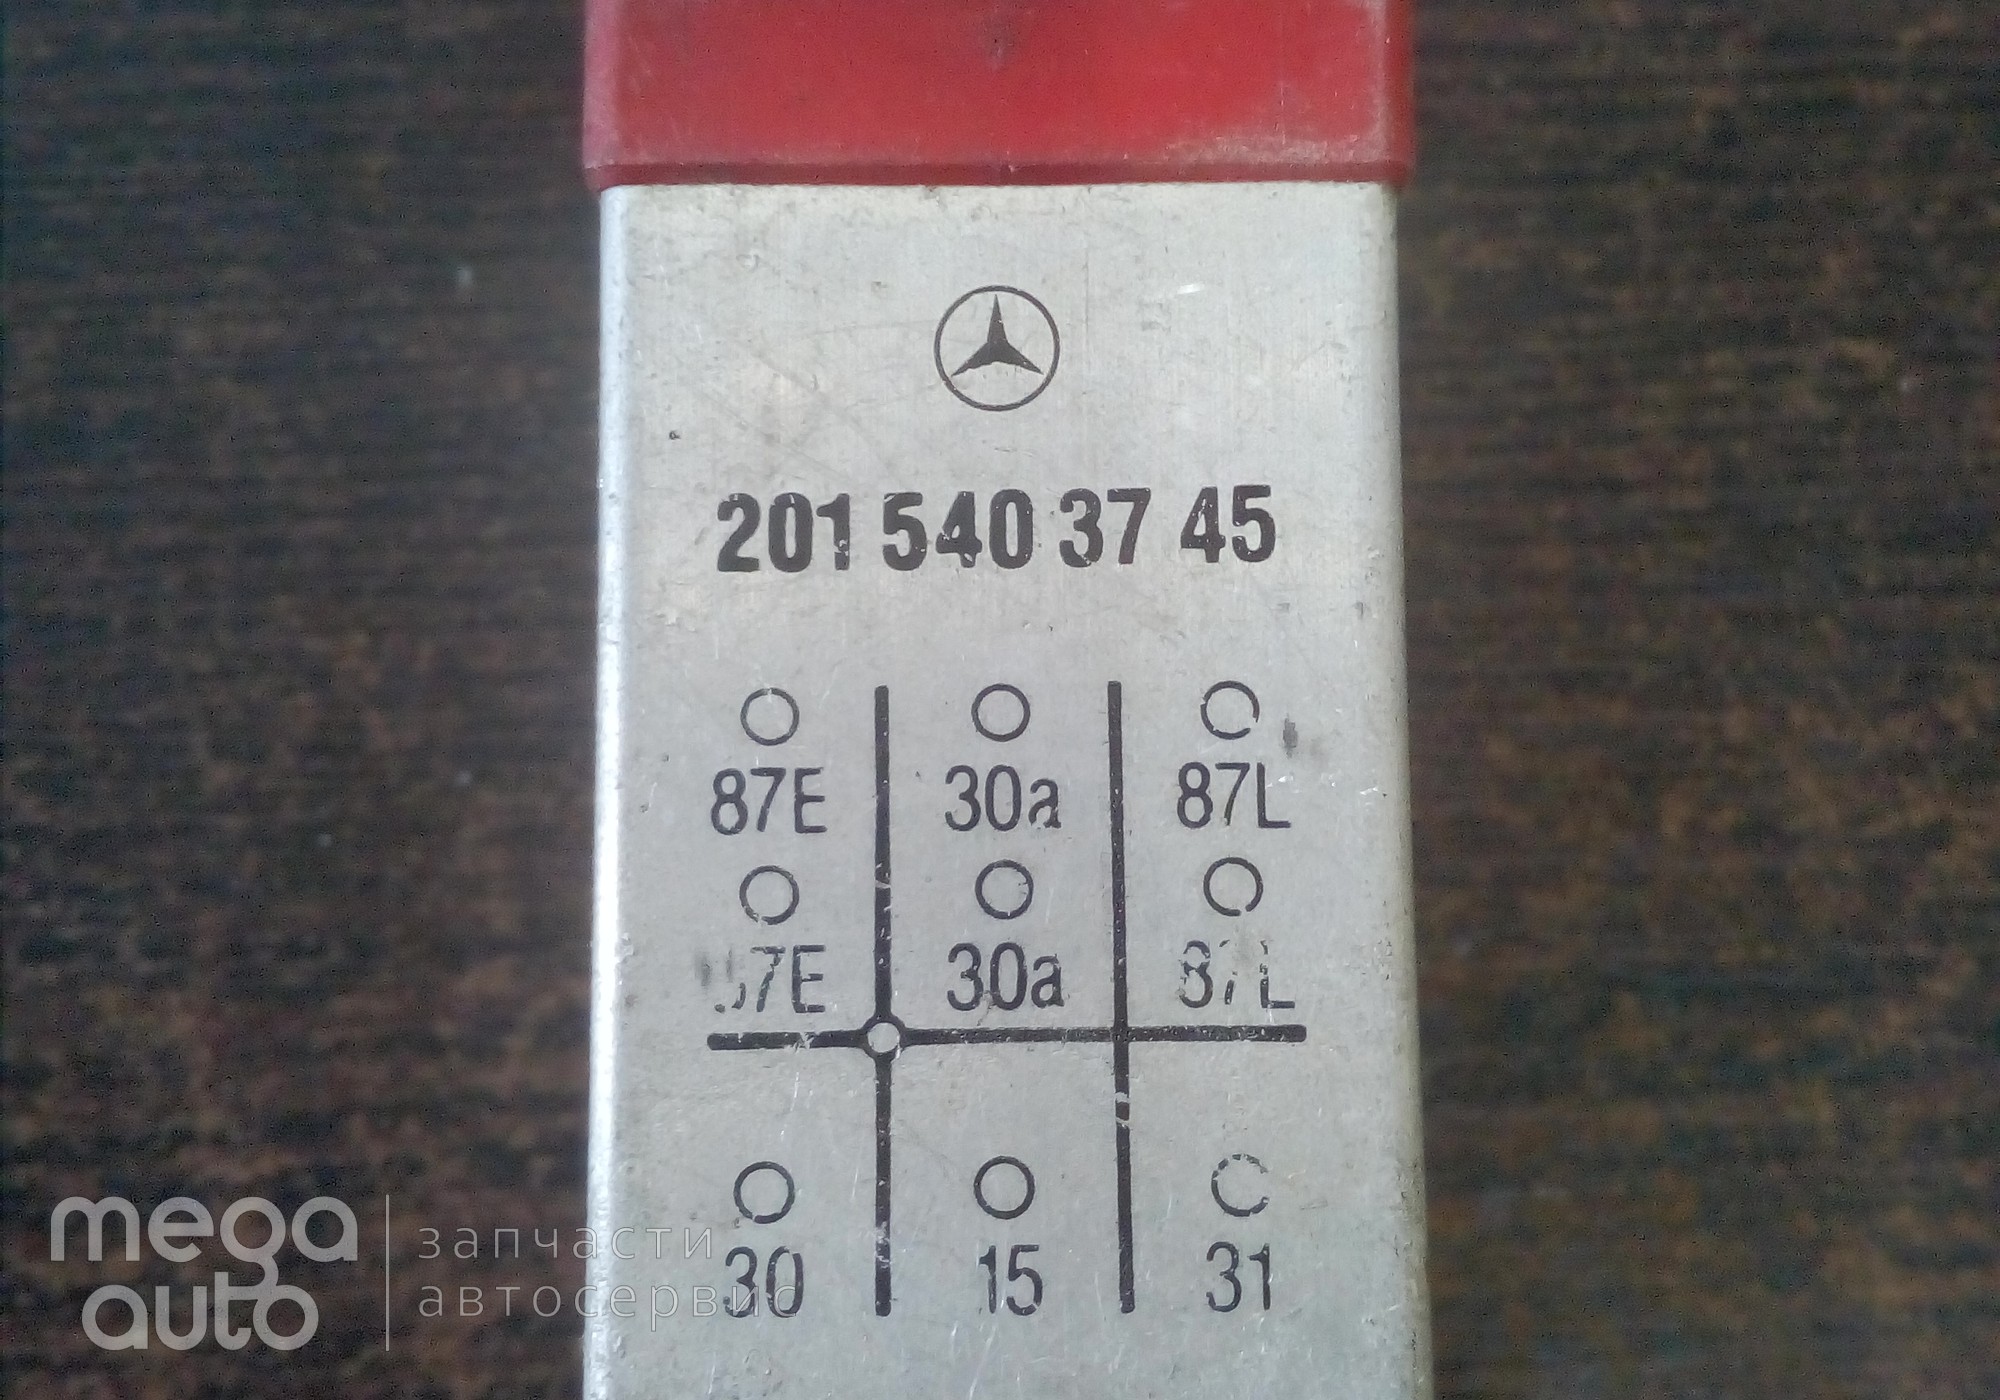 2015403745 Реле перегрузки мерседес для Mercedes-Benz S-class W126 (с 1979 по 1991)